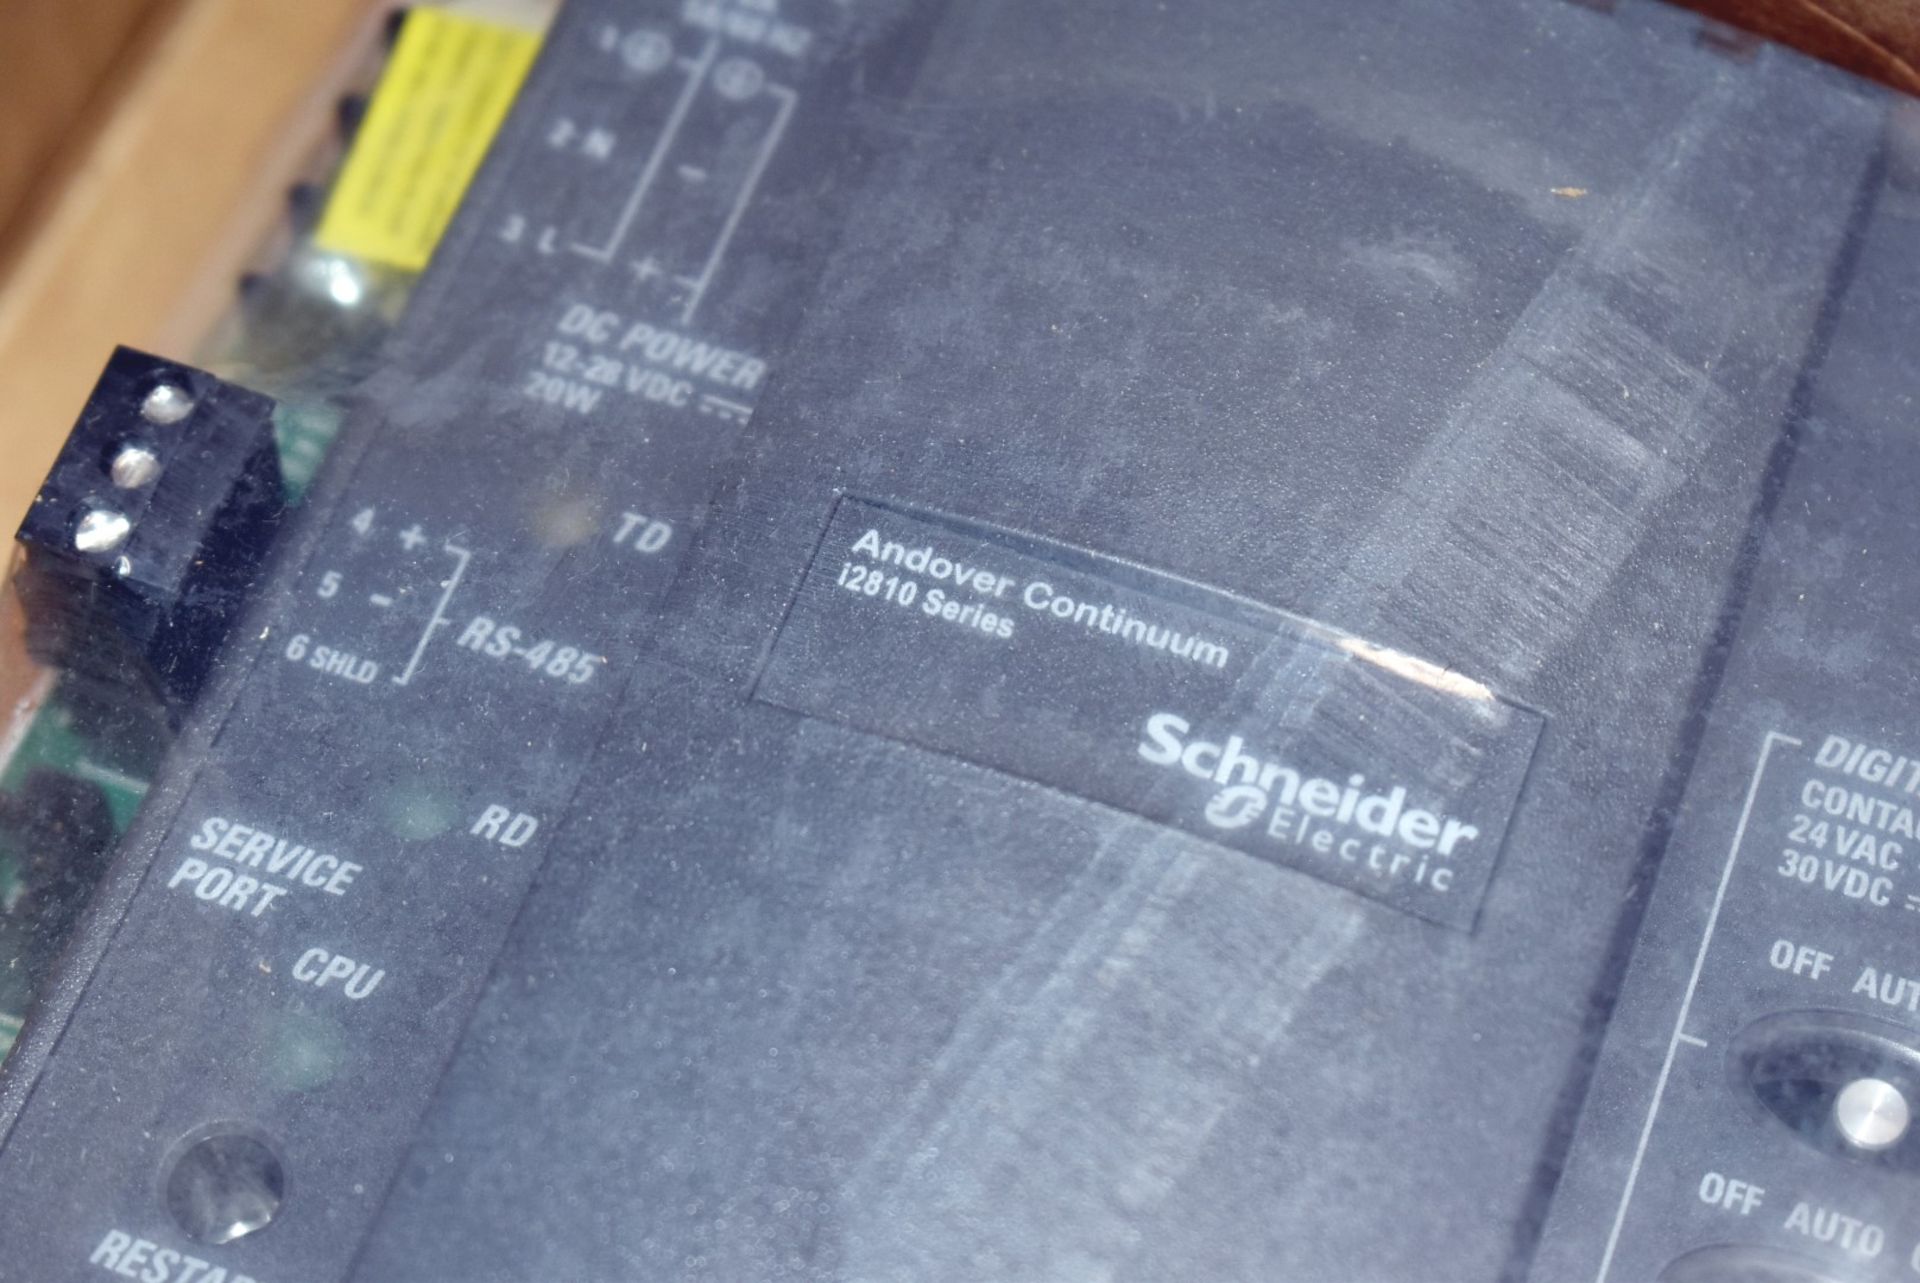 1 x Schneider Electric Andover Continuum i2810 Series Infinit II Local Controller - Unused Stock - Image 2 of 4